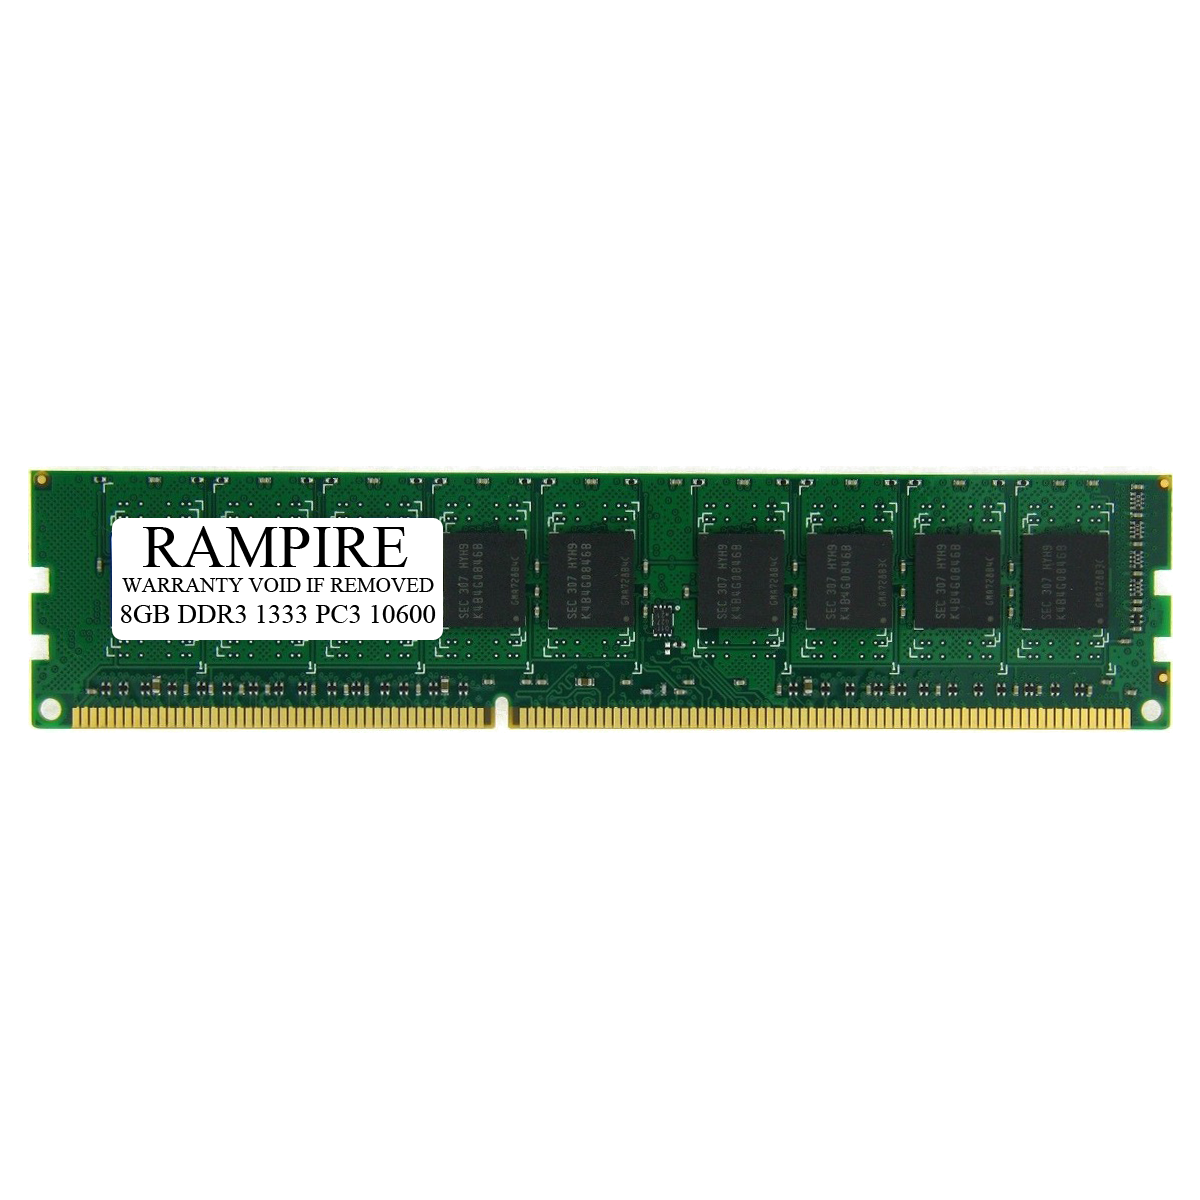 RAMPIRE 8GB DDR3 1333 (PC3 10600) 240-Pin SDRAM 2Rx8 Standard Profile 1.5V ECC Unregistered Server Memory